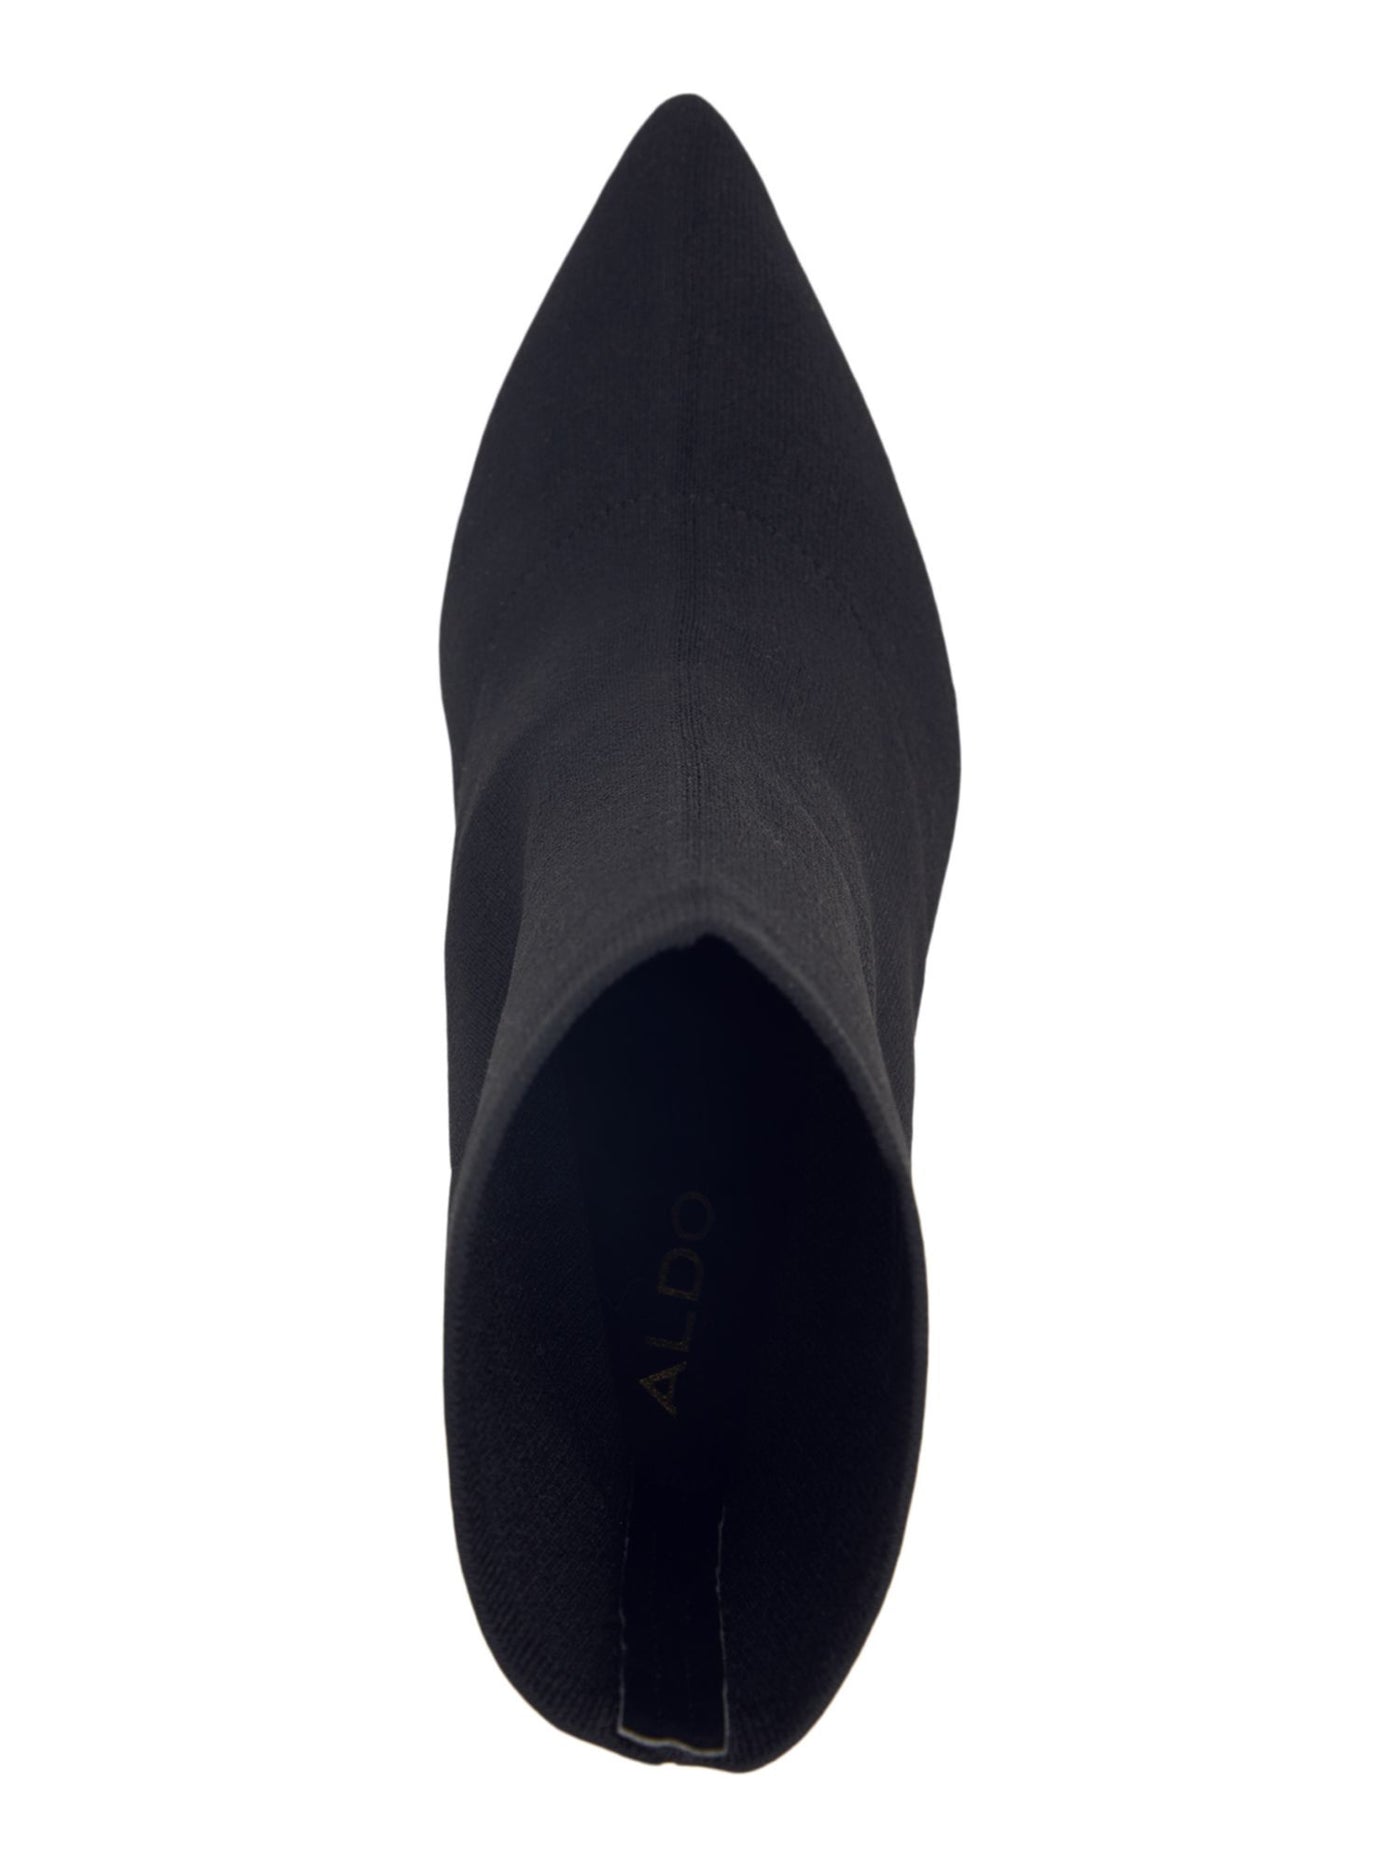 ALDO Womens Black Stretch Padded Tylah Pointed Toe Dress Booties 10 B